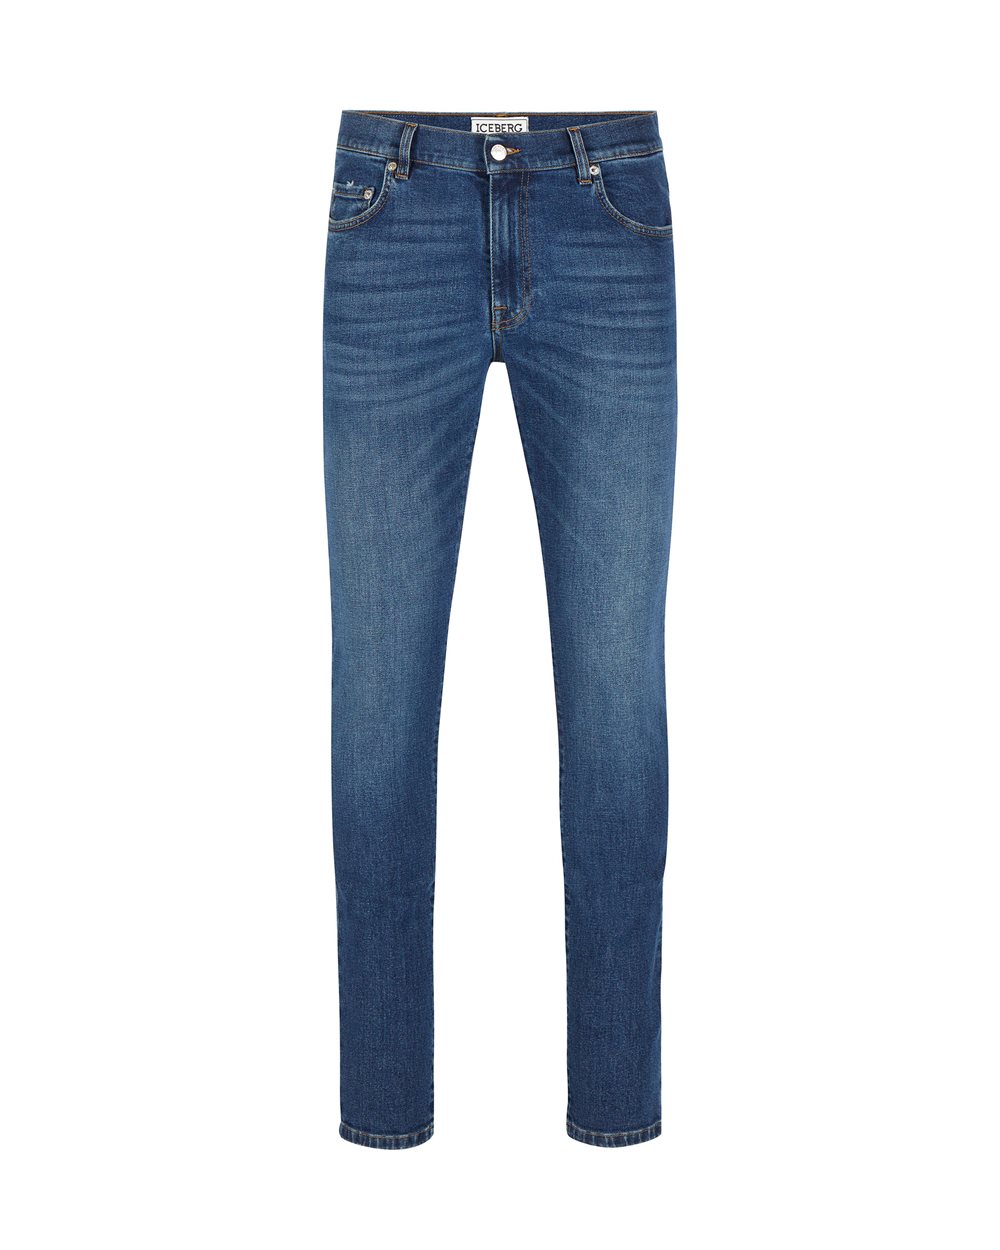 5-pocket skinny jeans | Iceberg - Official Website